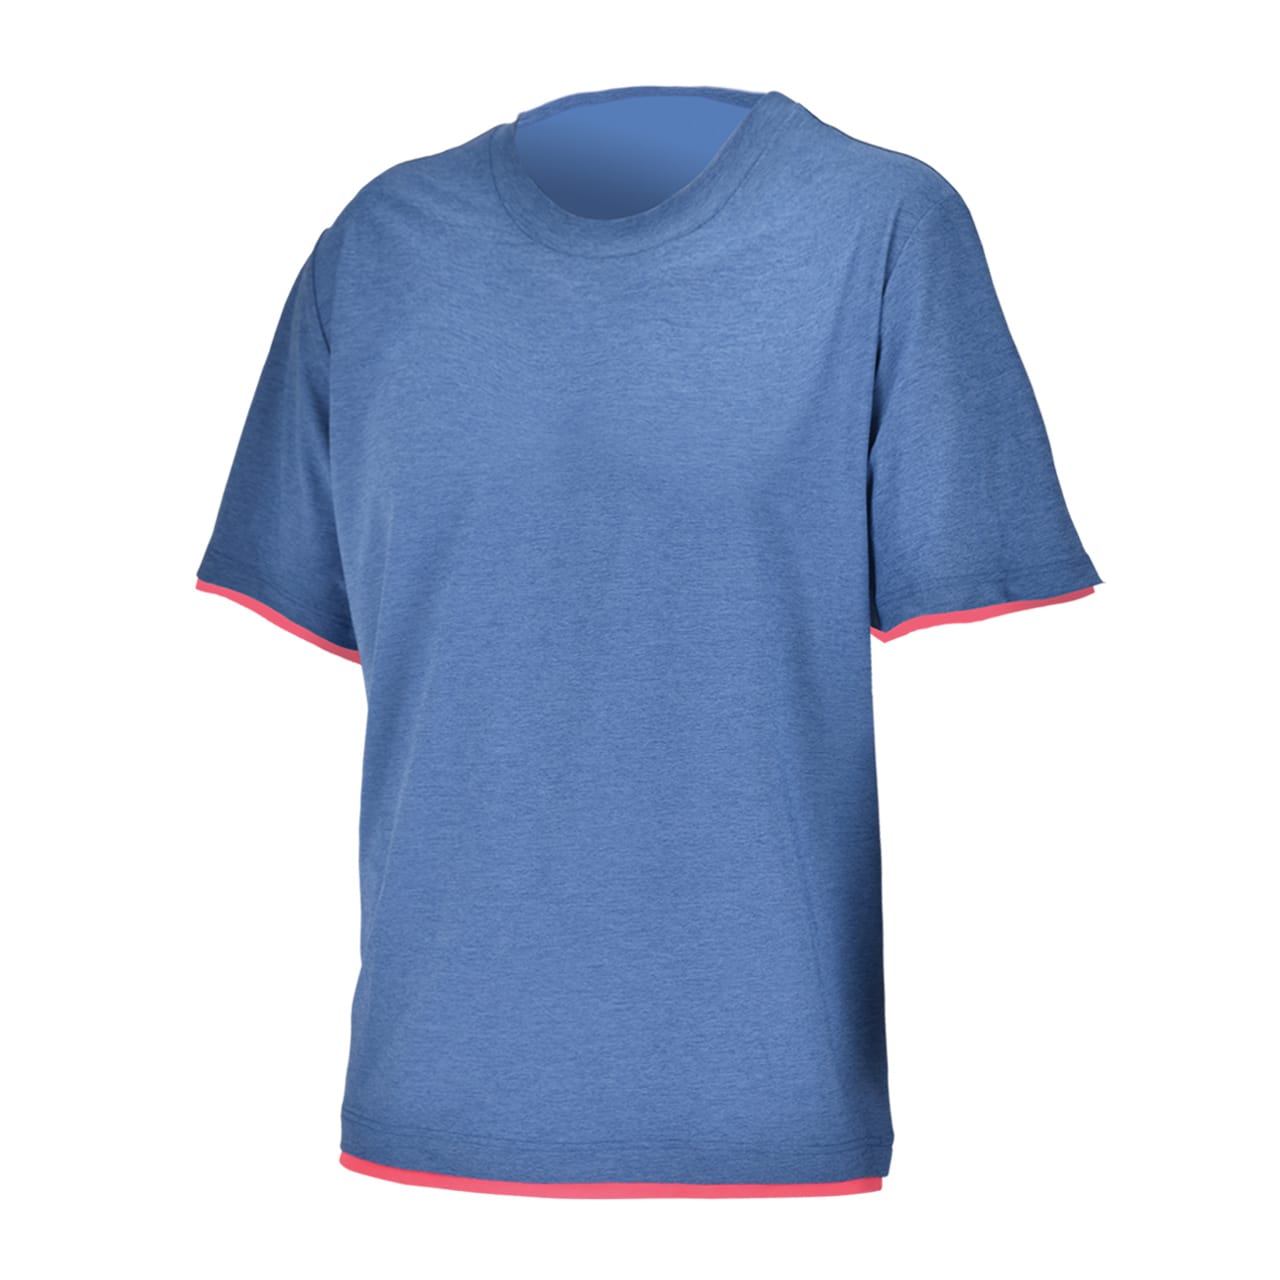 Crew Neck / Relax Shirt (All Seasonモデル) メンズ JR1935 2021 Spring-Summer スポーツウェア クルーネック Tシャツ 吸汗 速乾 温度調節 紫外線防止 ストレッチ性 長期抗菌 防臭 静電気防止